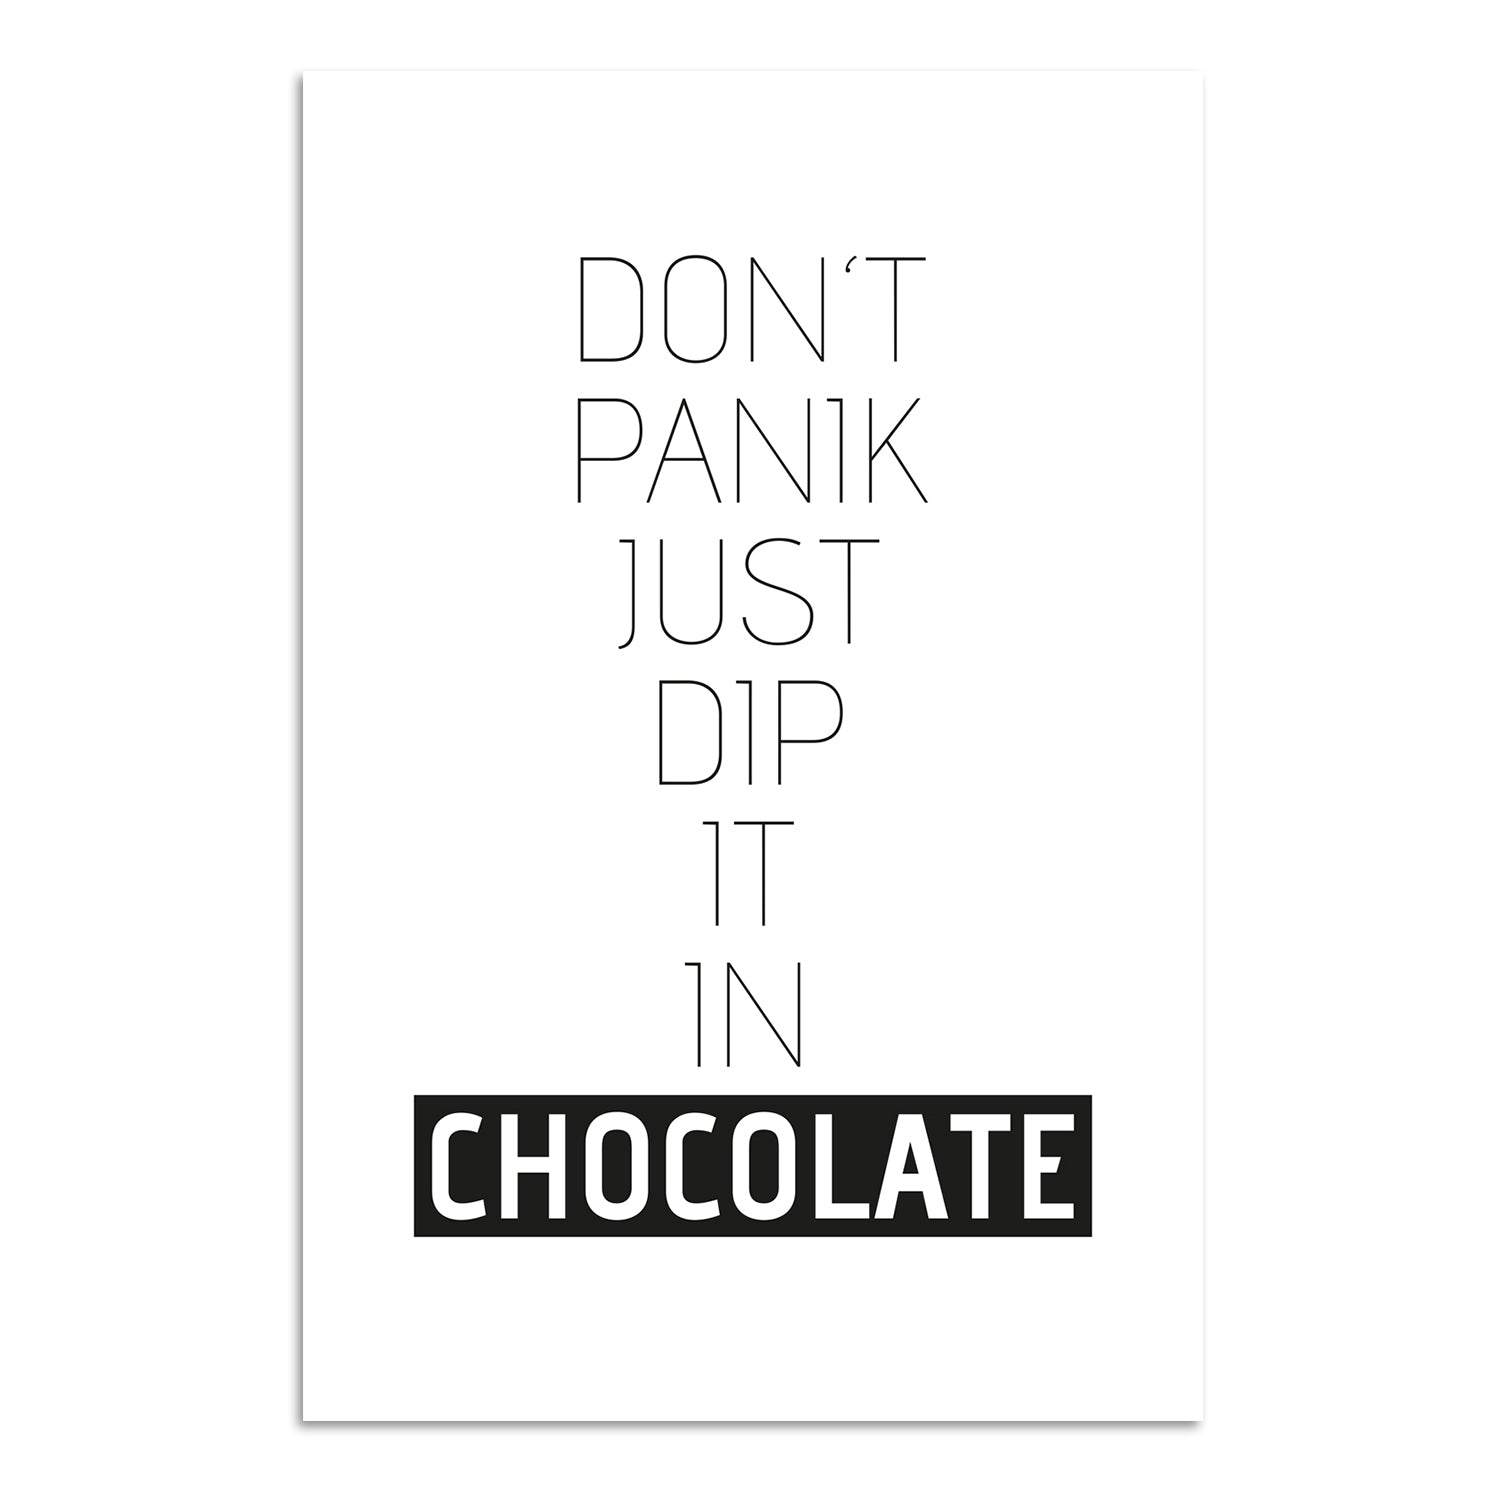 Blechschild - Dont panik just dip it in chocolate